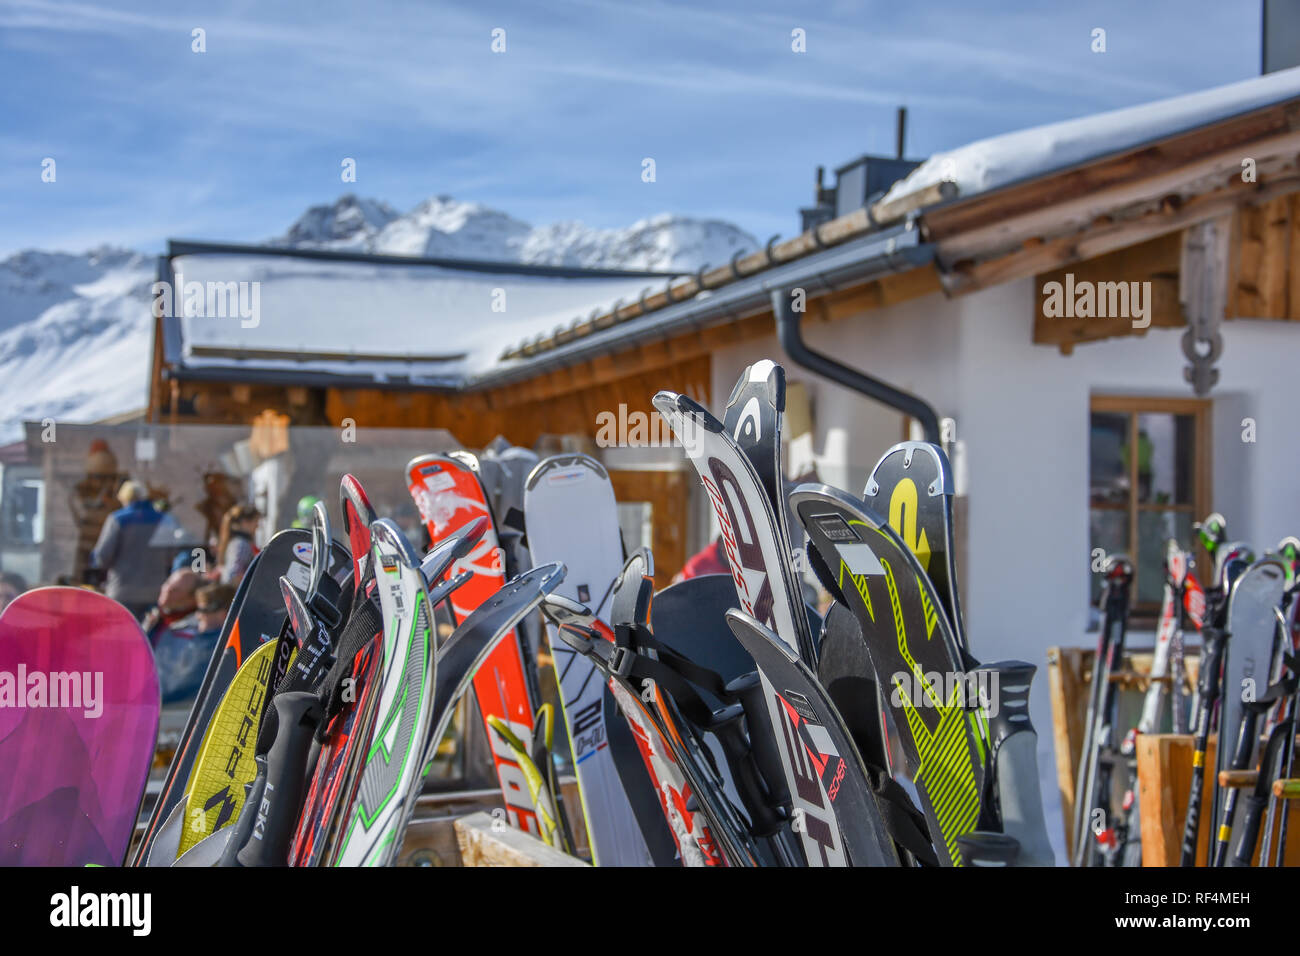 HOHE MUT ALM, OBERGURGL: February 20, Lots of snow ski in the restorant in the top mountain on February 20, 2017 in Obergurgl, Austria Stock Photo